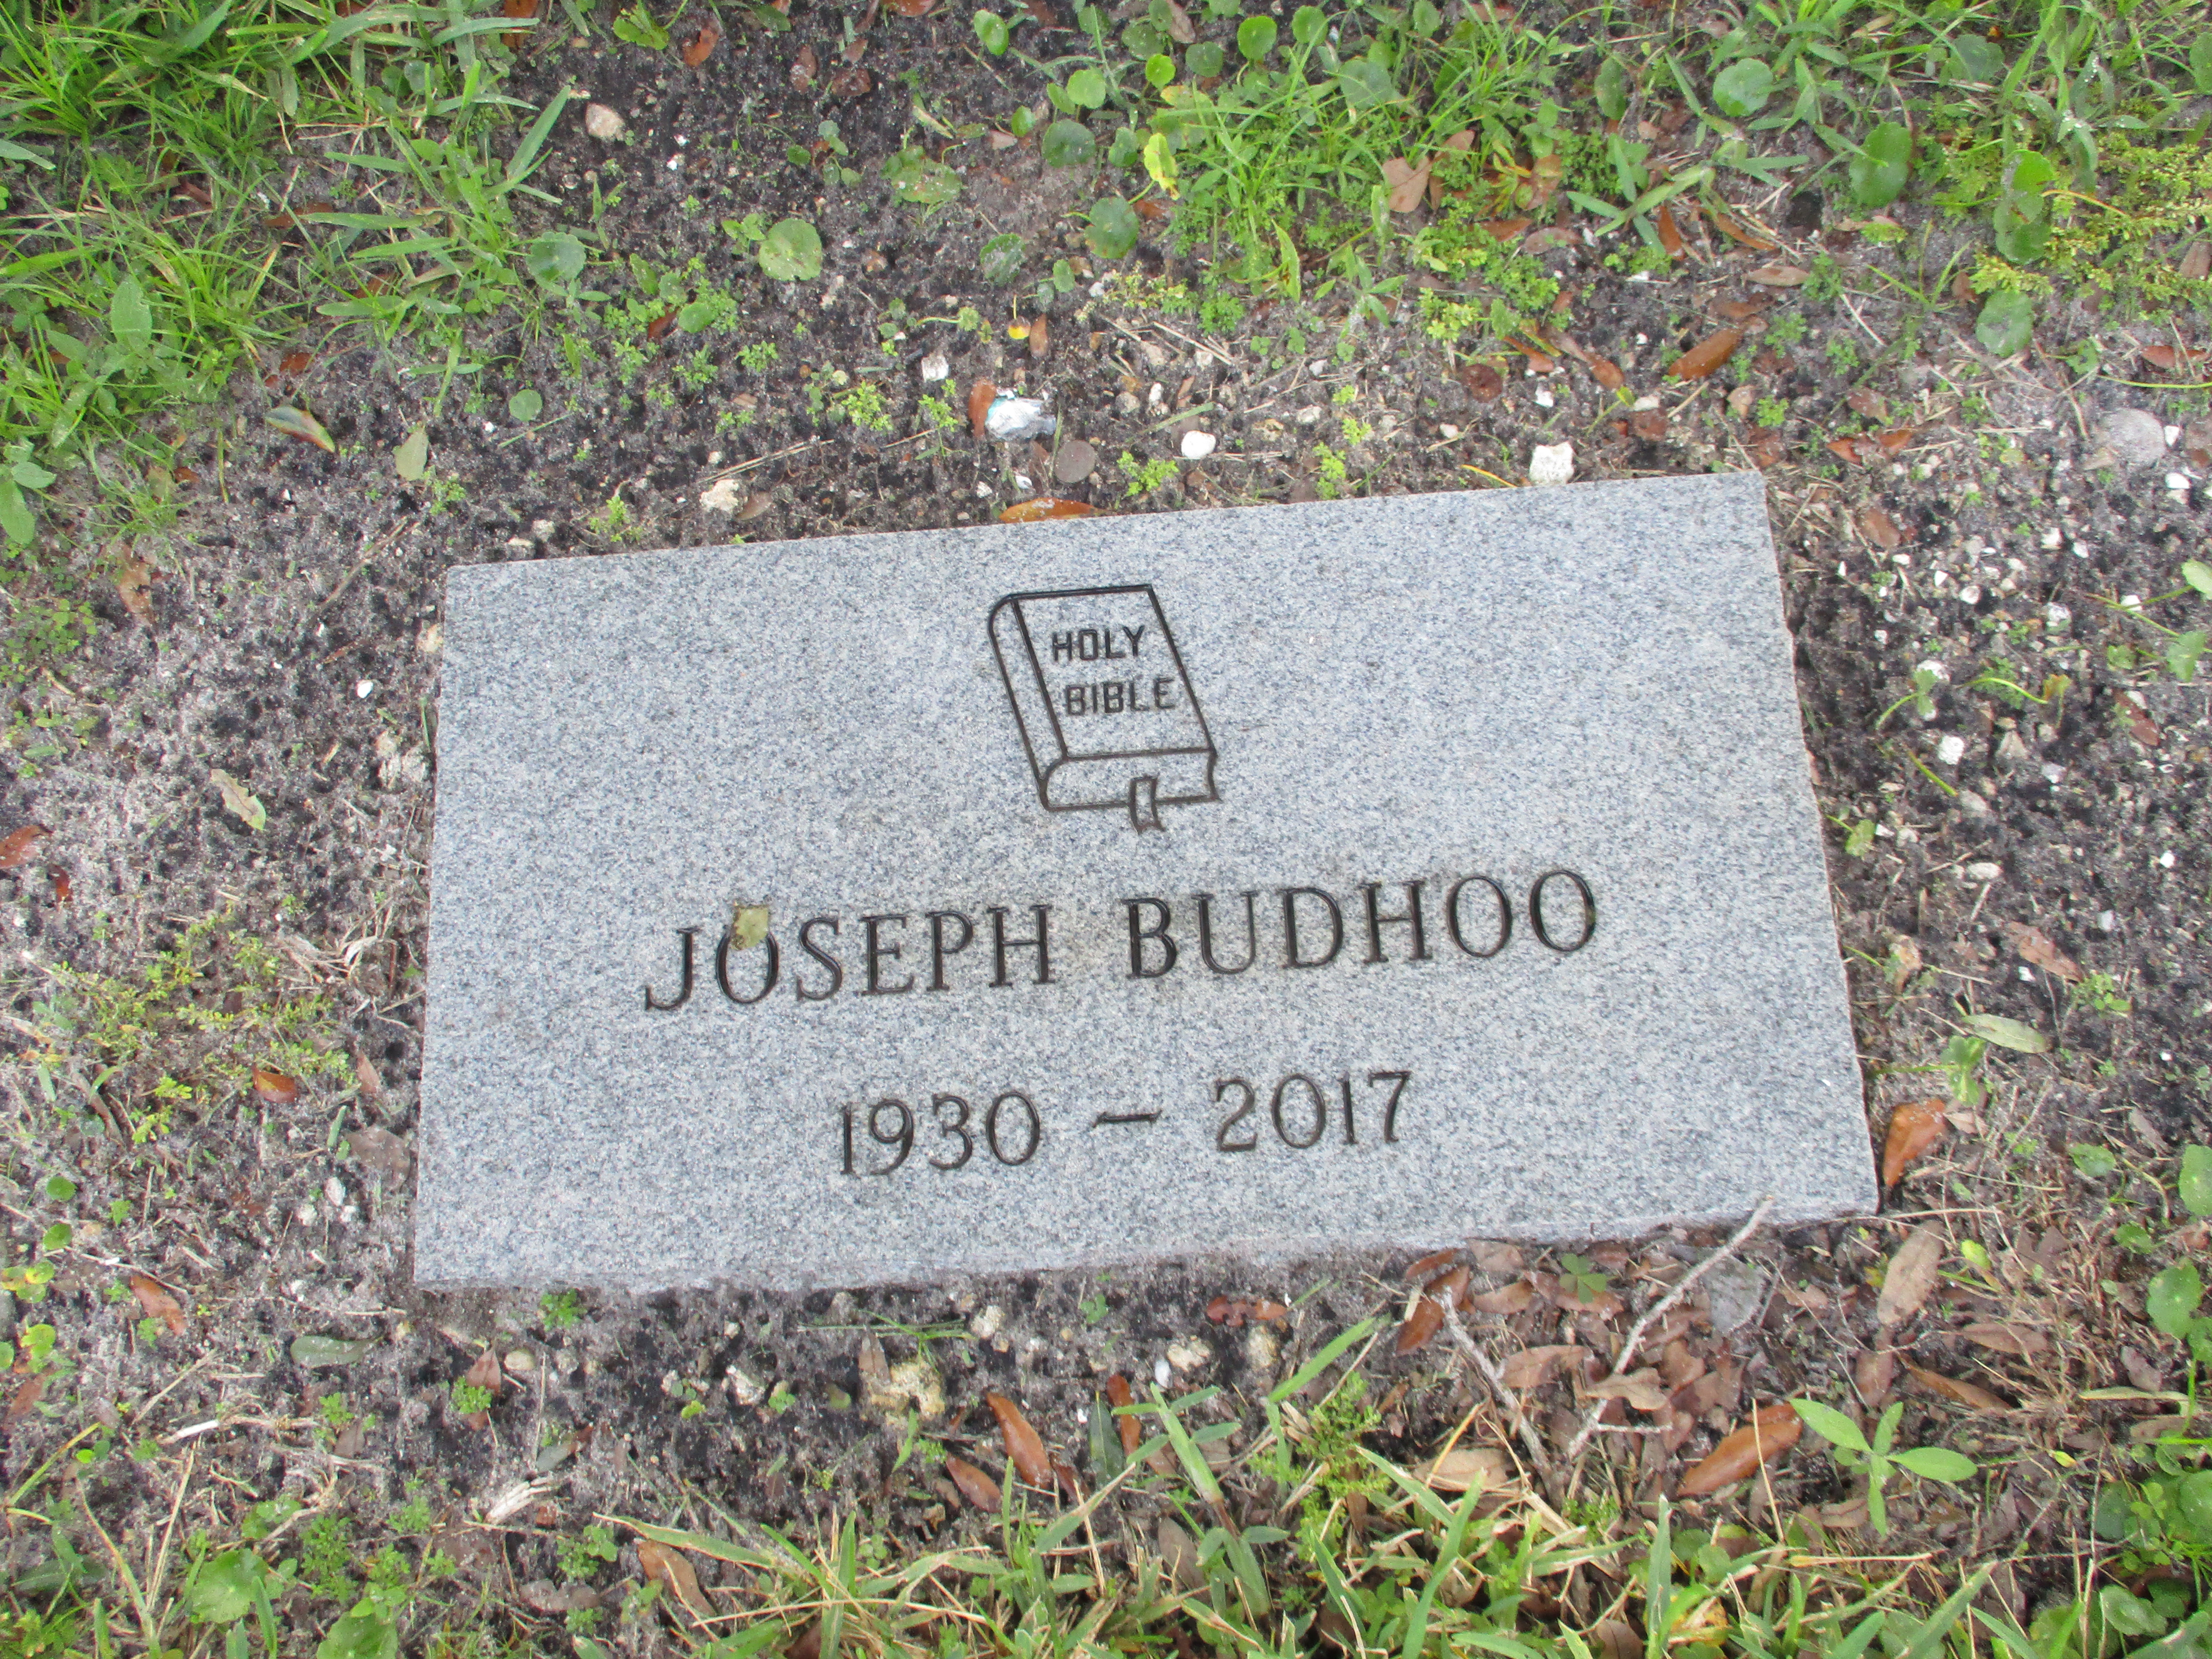 Joseph Budhoo